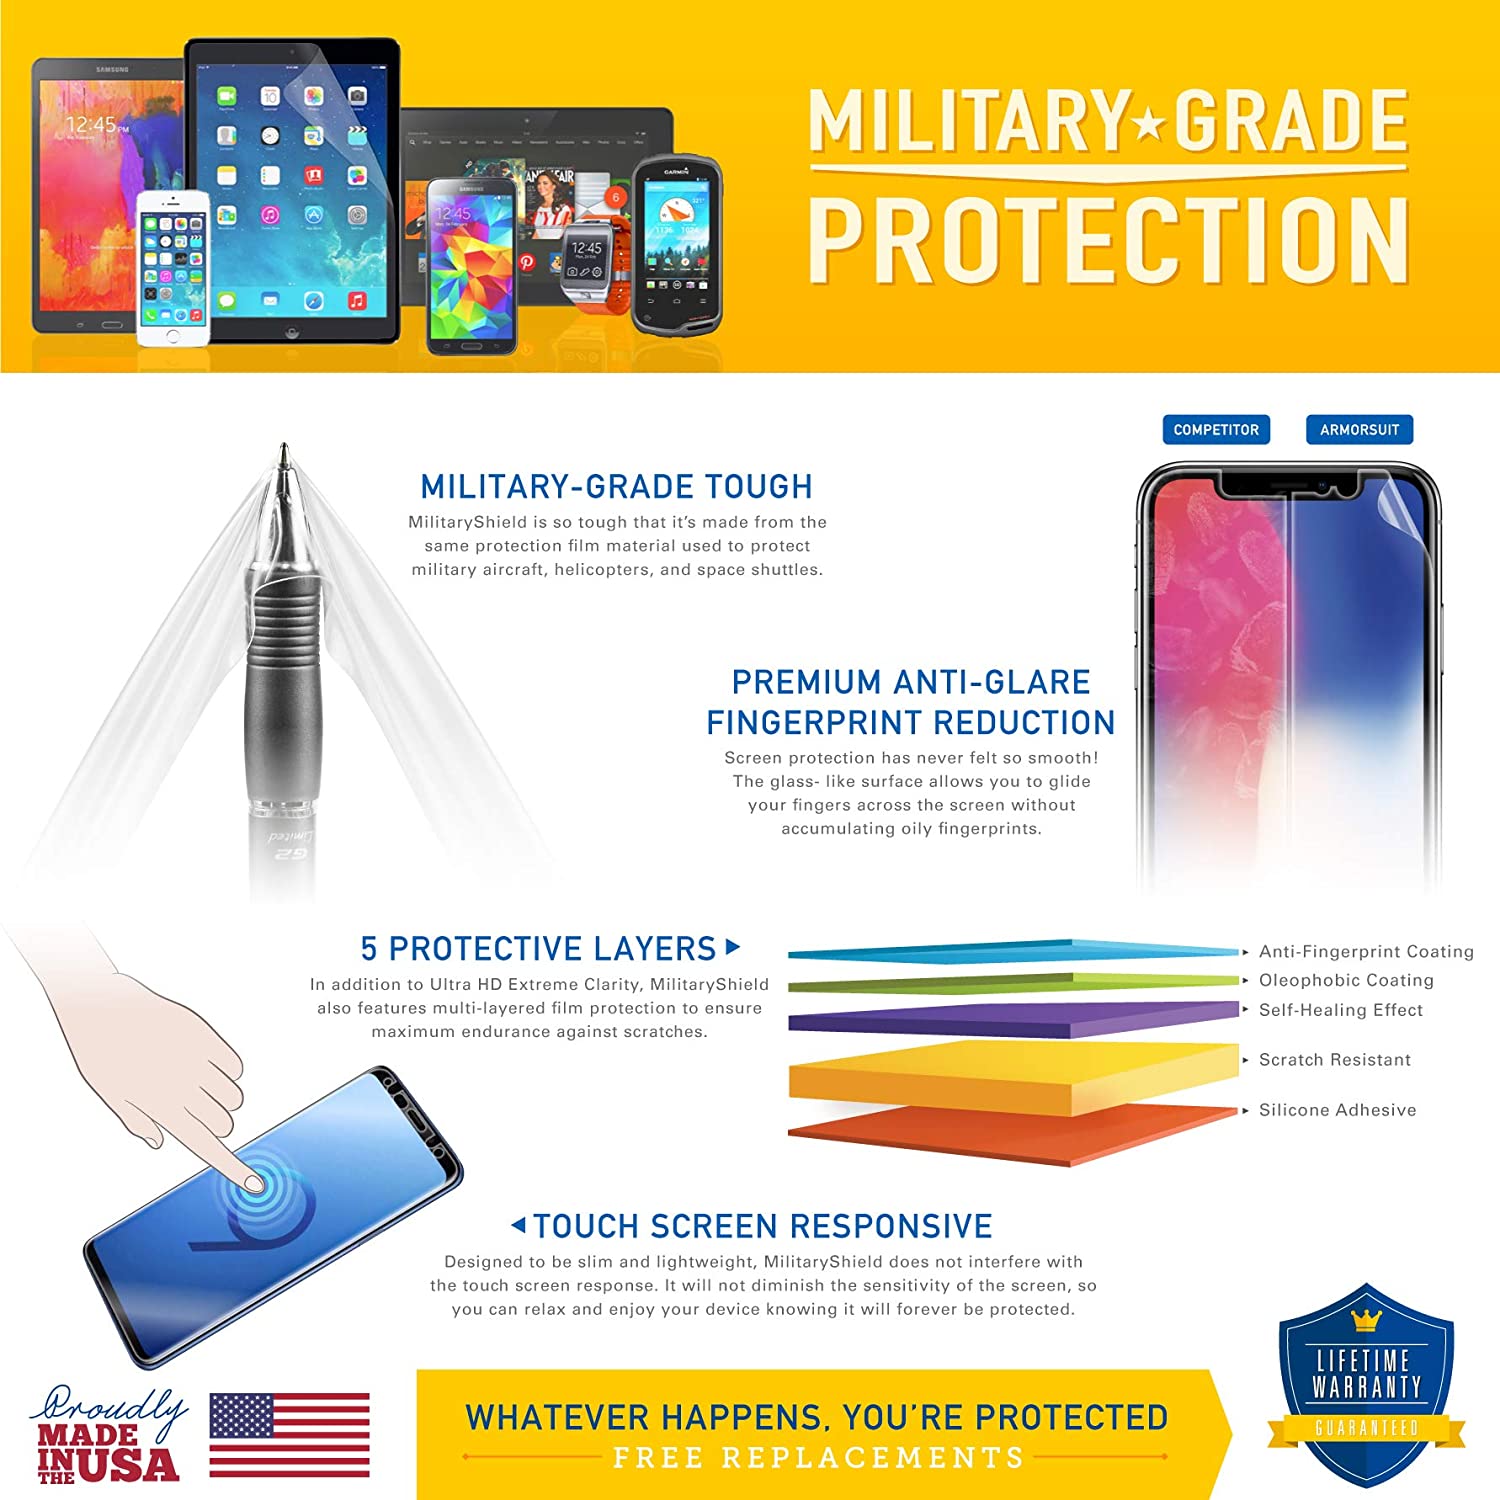 Samsung Gear S2 3G/4G Anti-Glare (Matte) Screen Protector (2-pack)